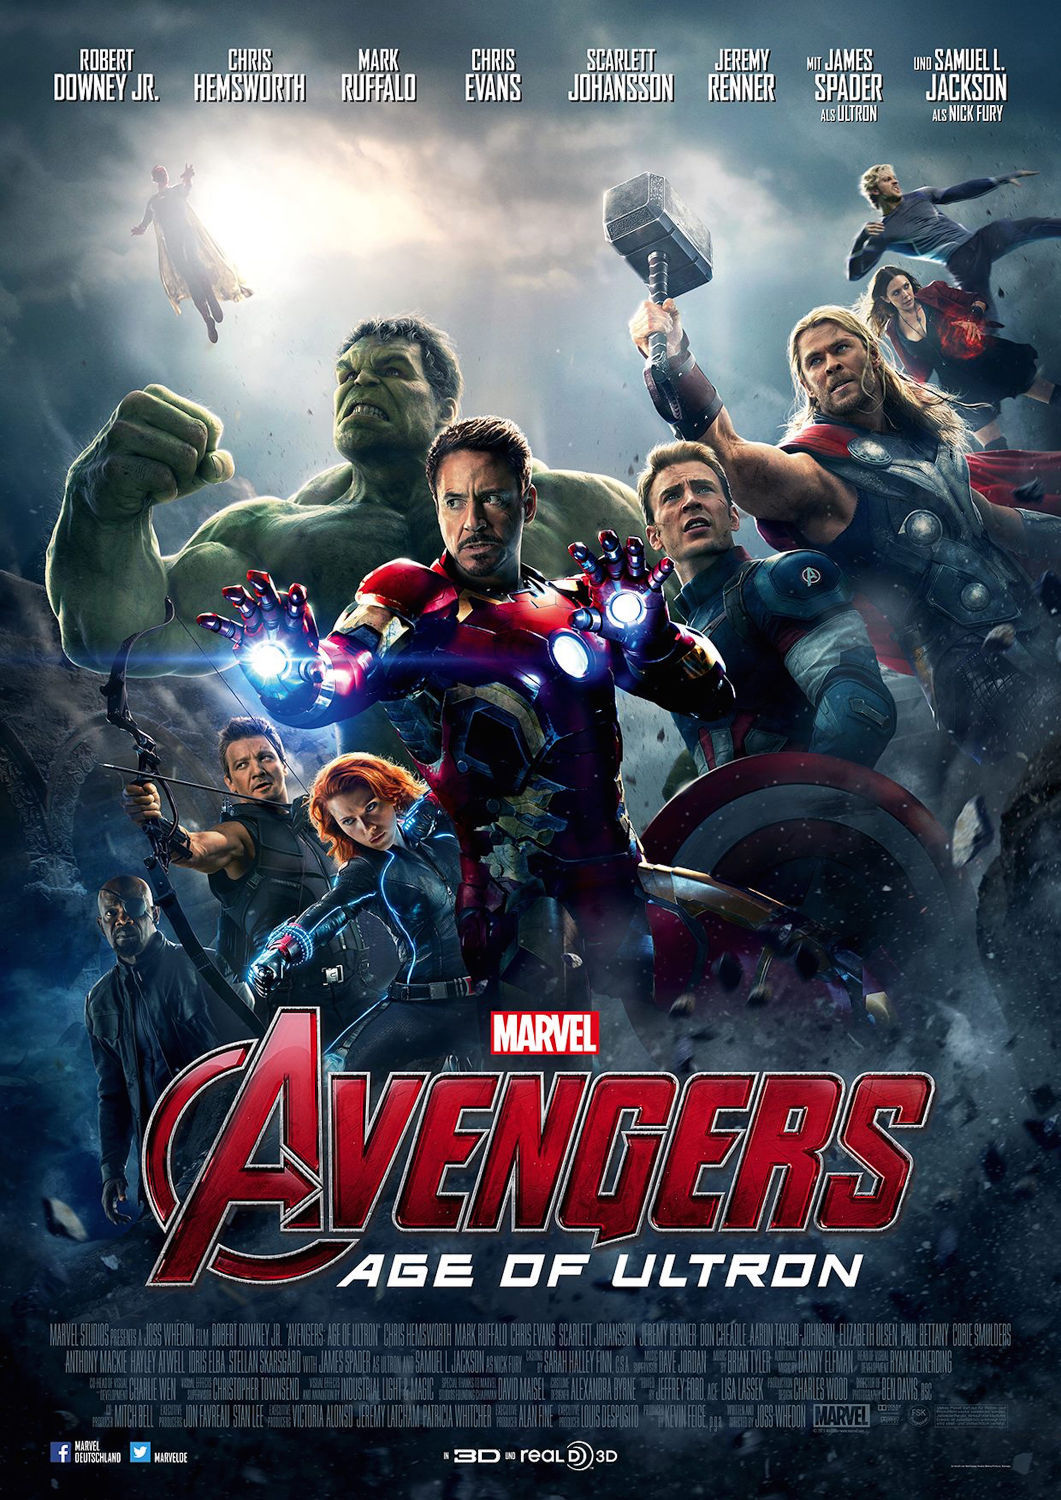 Avengers 2 Age of Ultron Poster (2).jpg